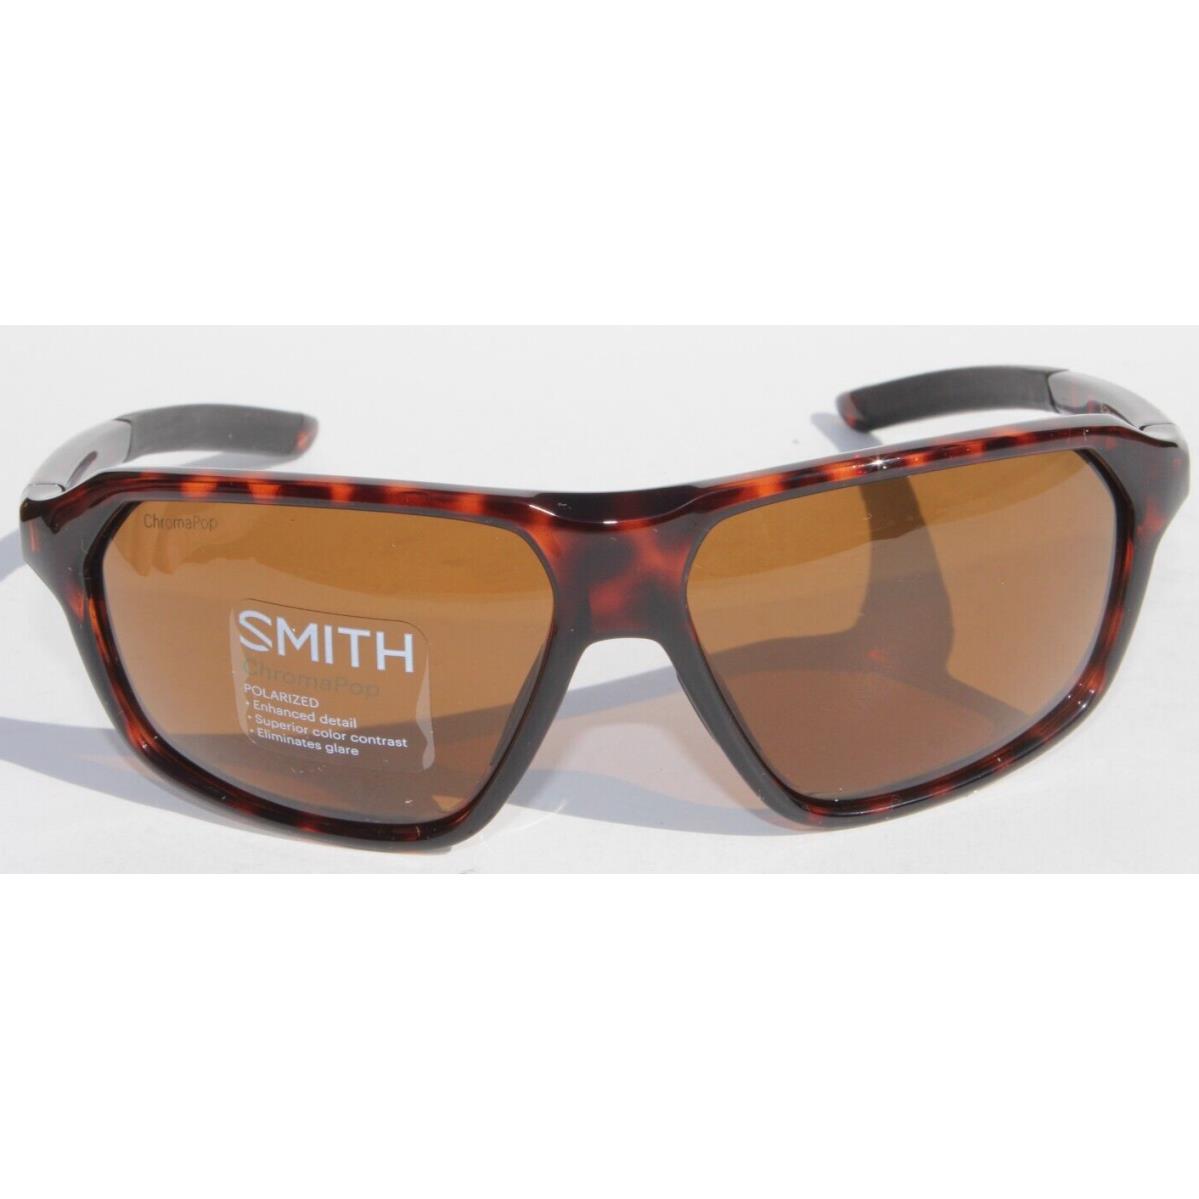 Smith Optics sunglasses Pathway - Brown Frame, Brown Lens 1